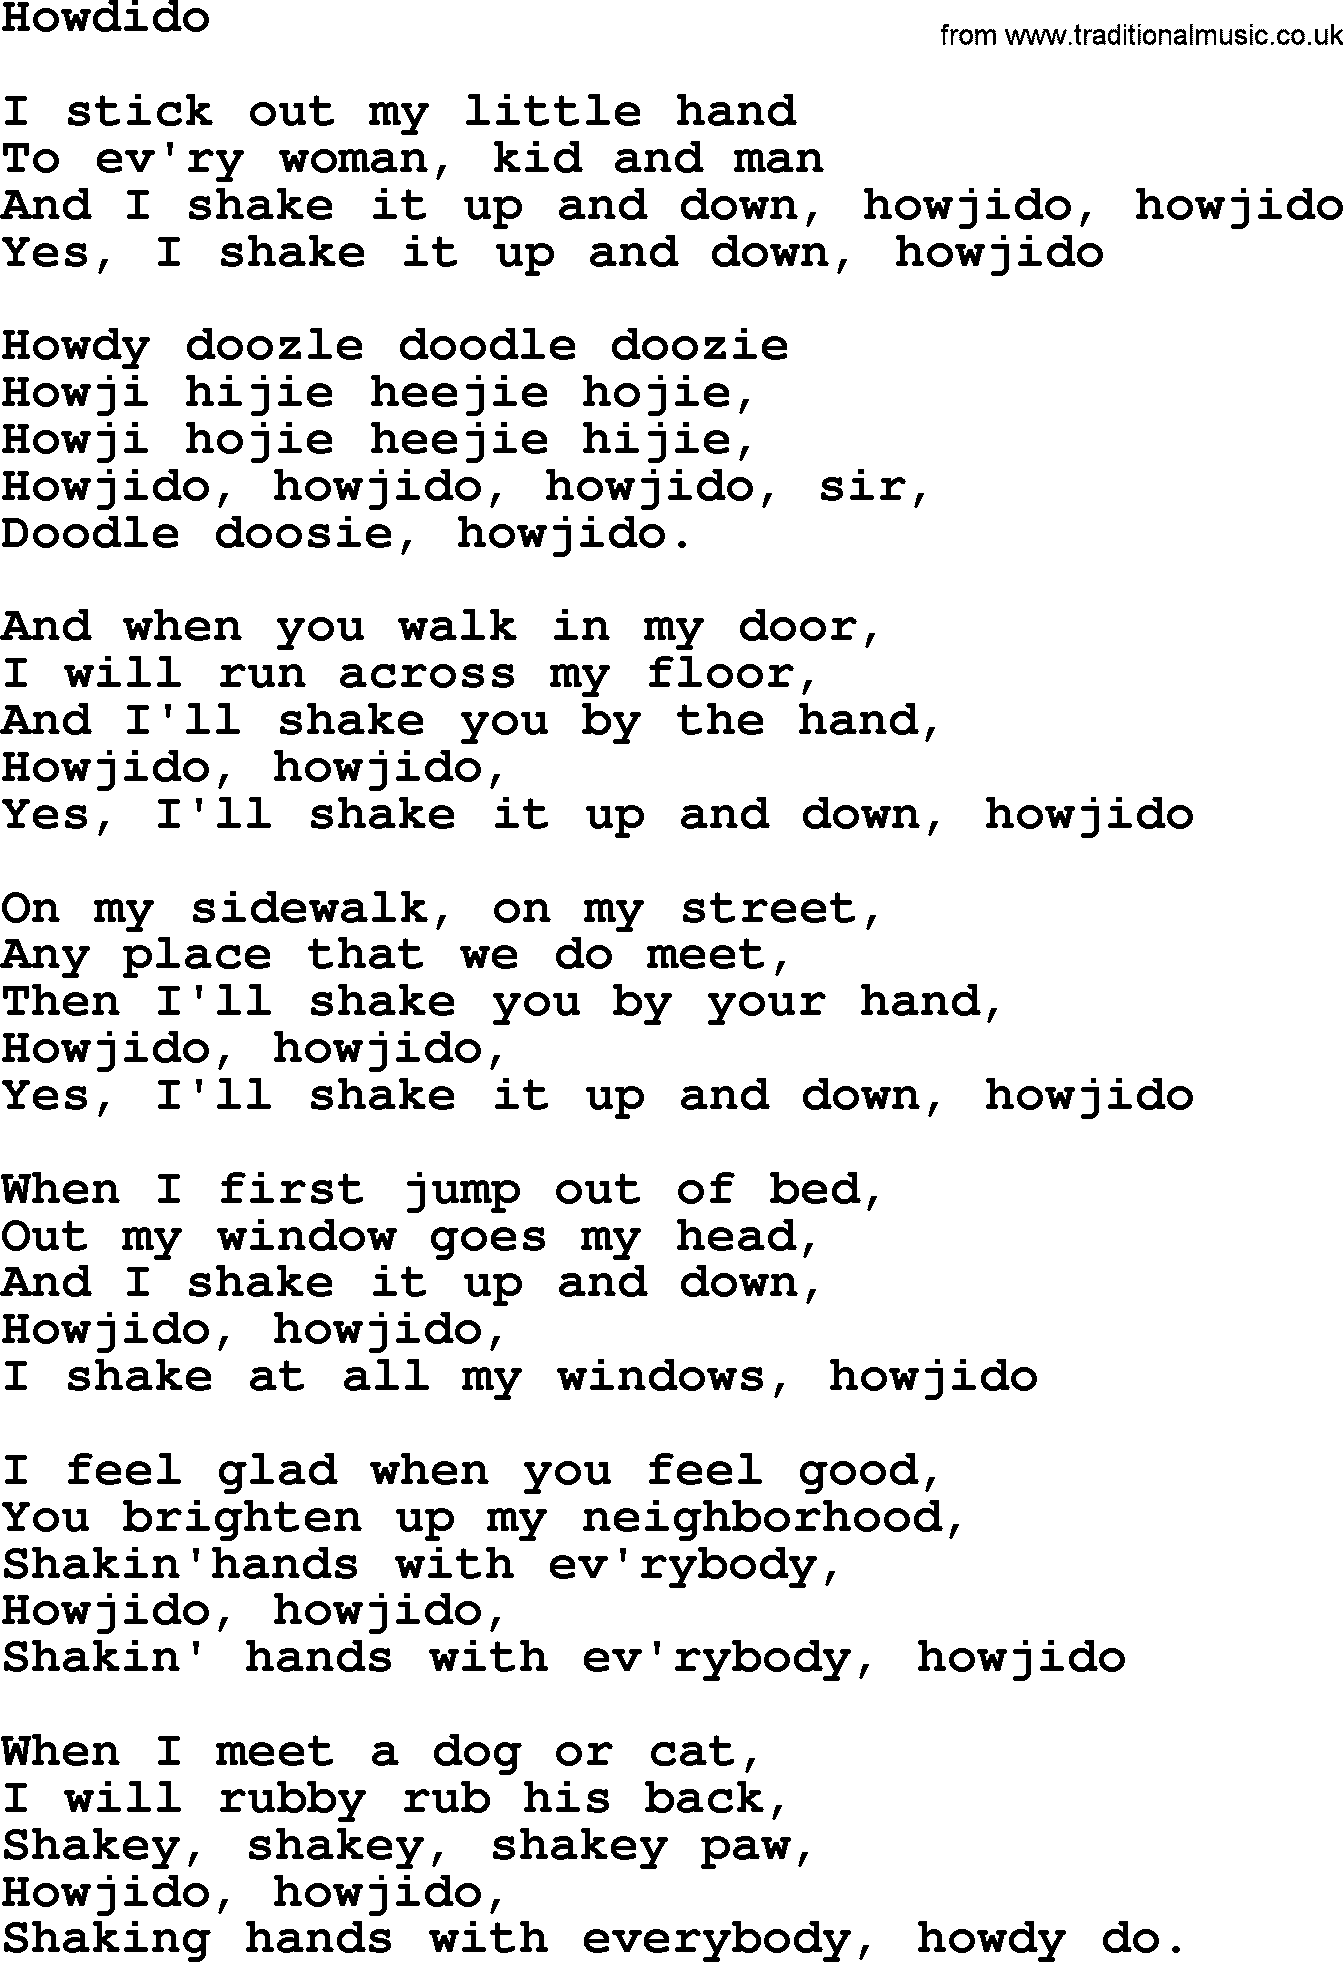 Woody Guthrie song Howdido lyrics